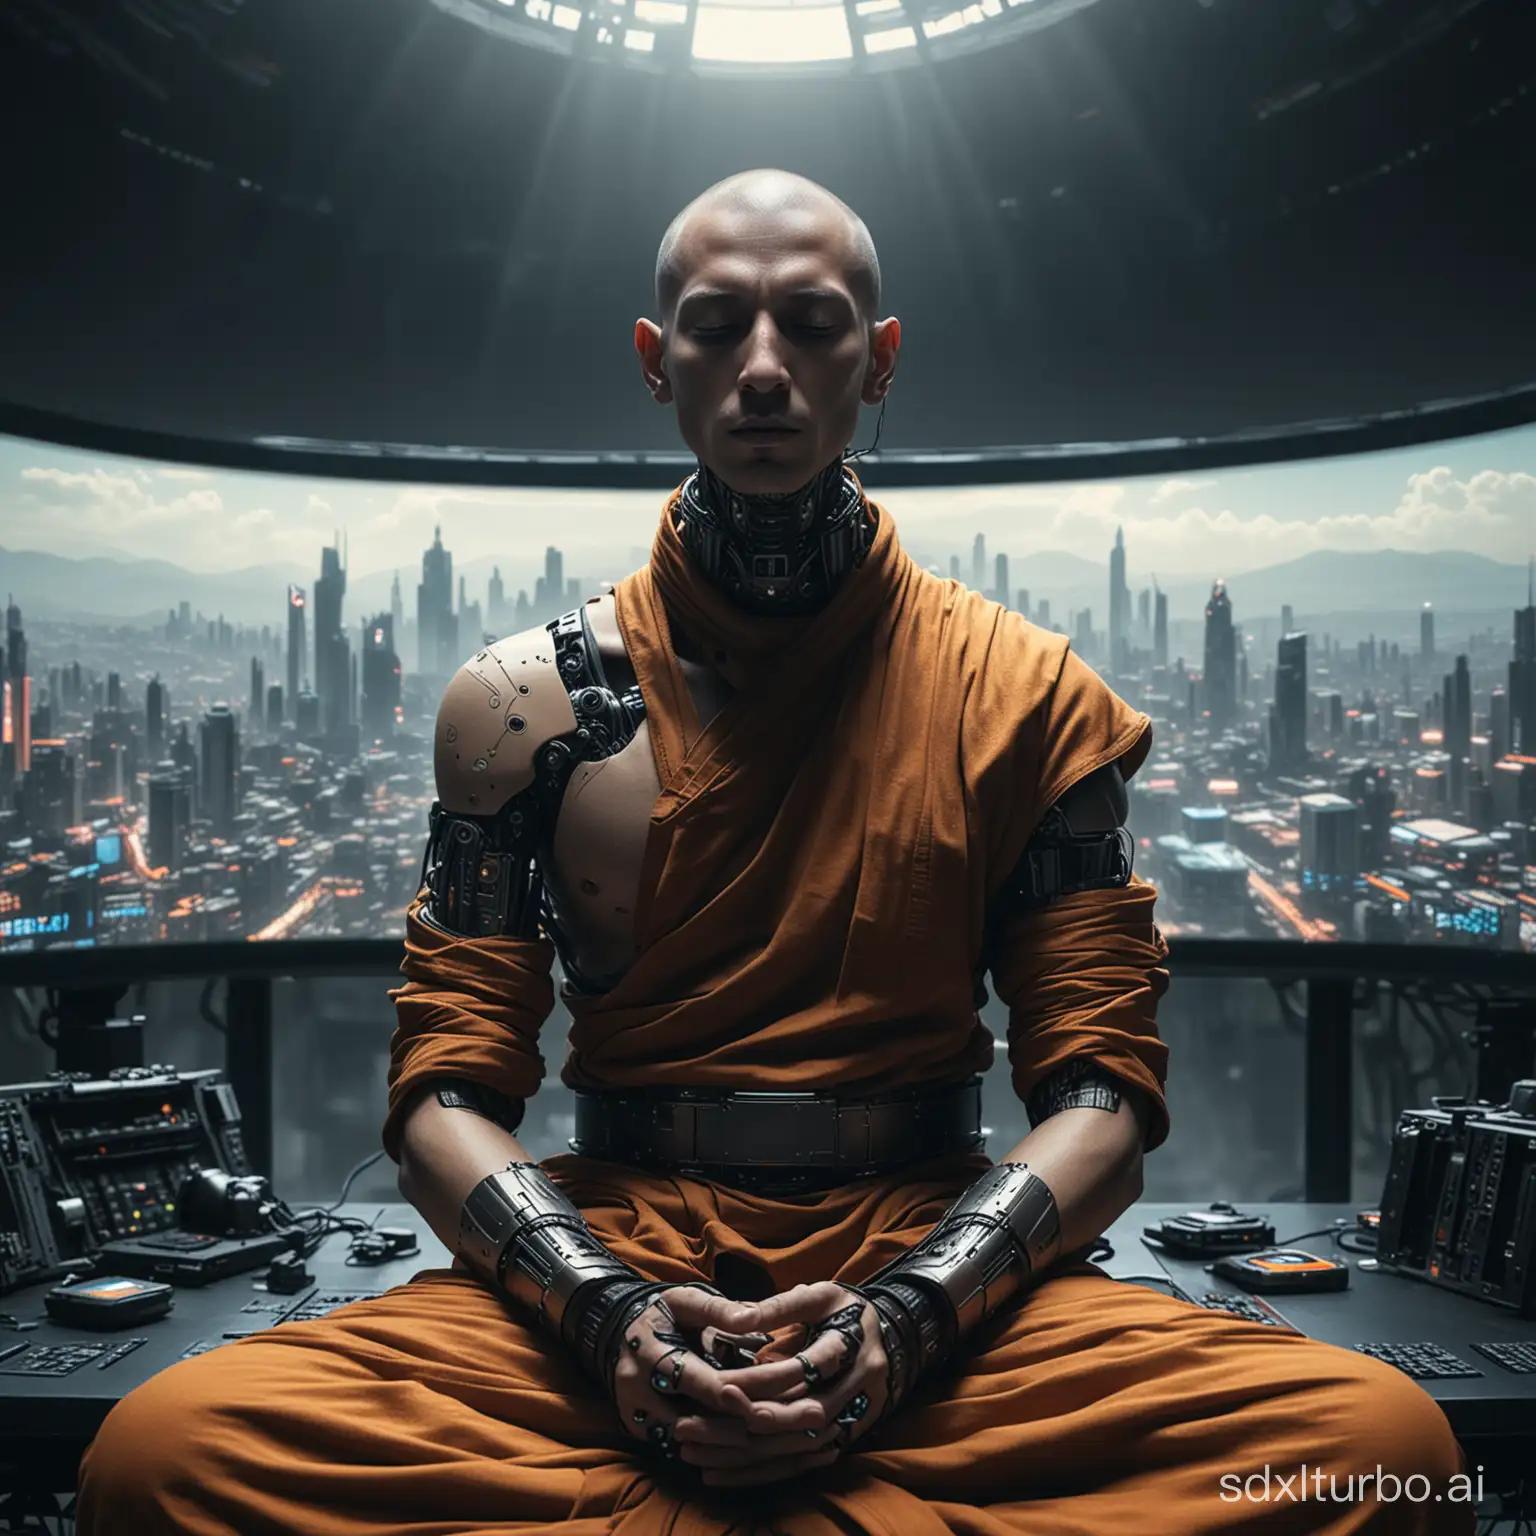 Cybernetic-Monk-Meditating-Amidst-Monitors-in-Cyberpunk-Ambiance